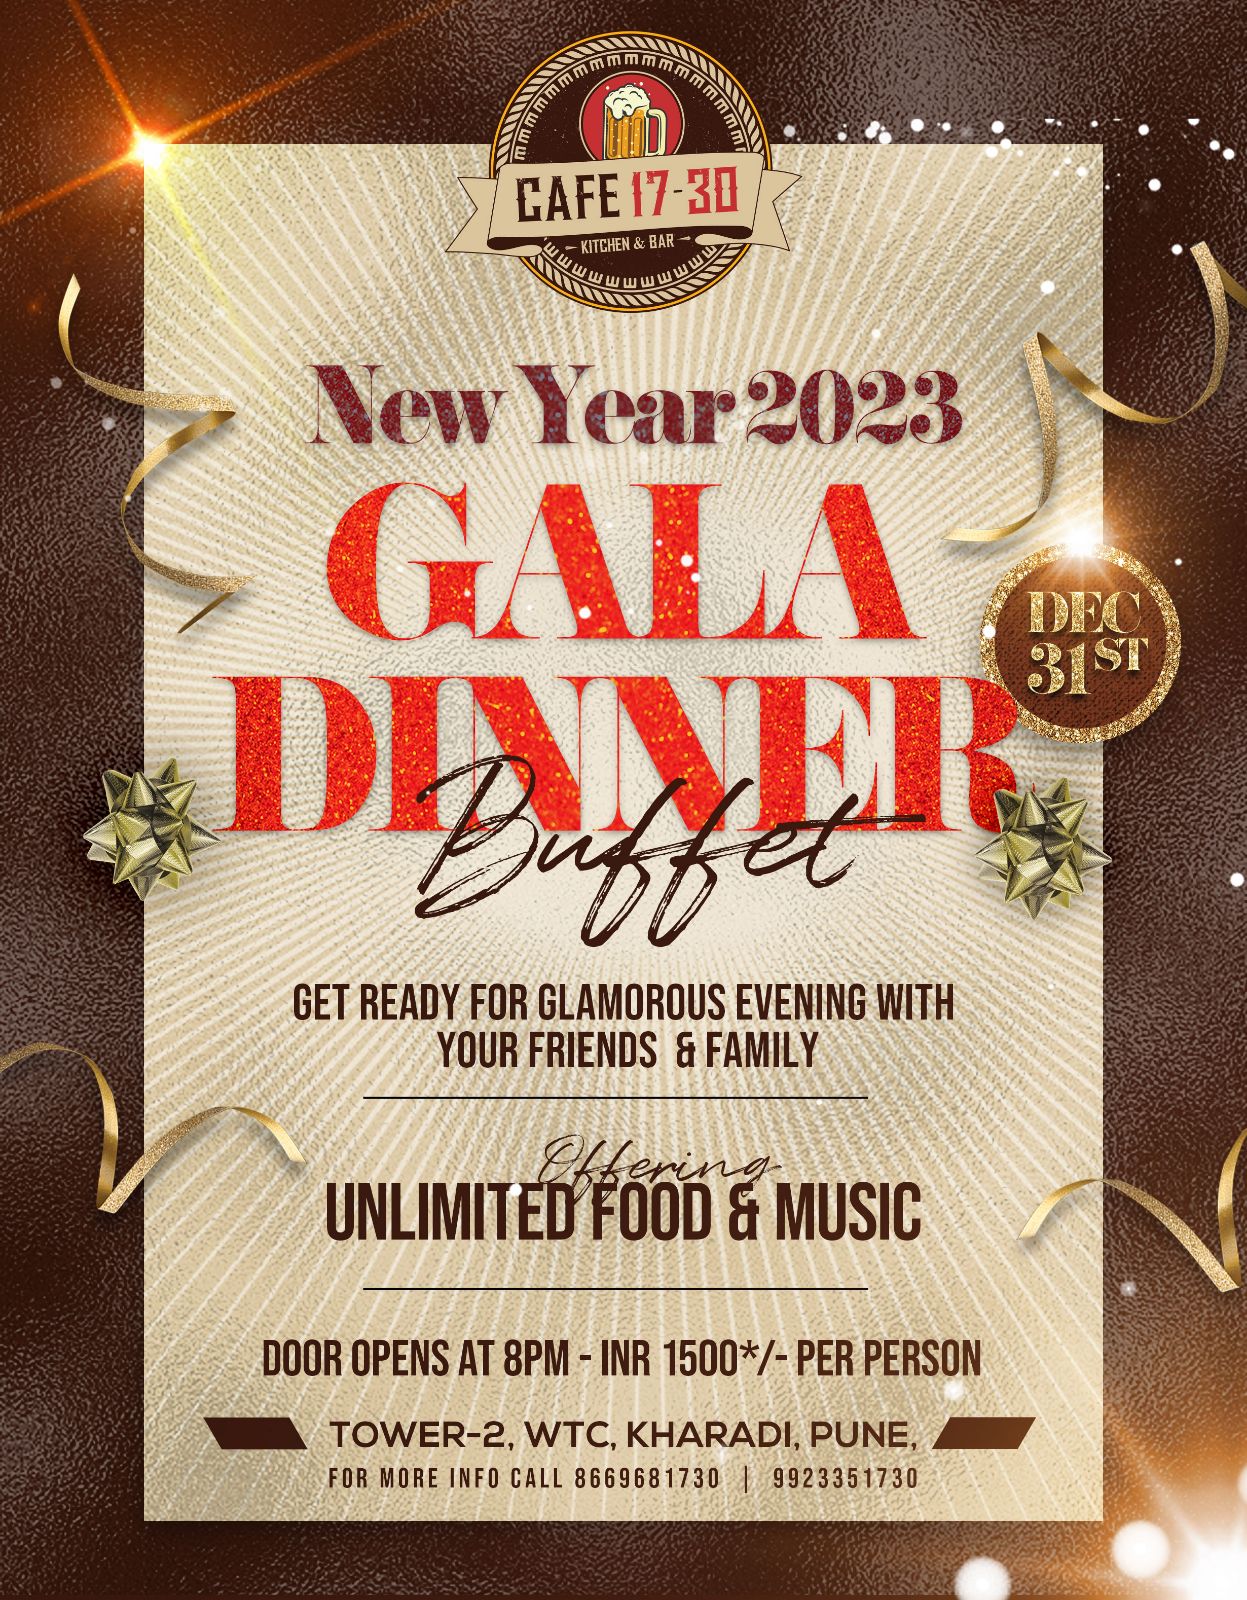 New Year's eve Gala Dinner Buffet, Pune, Maharashtra, India